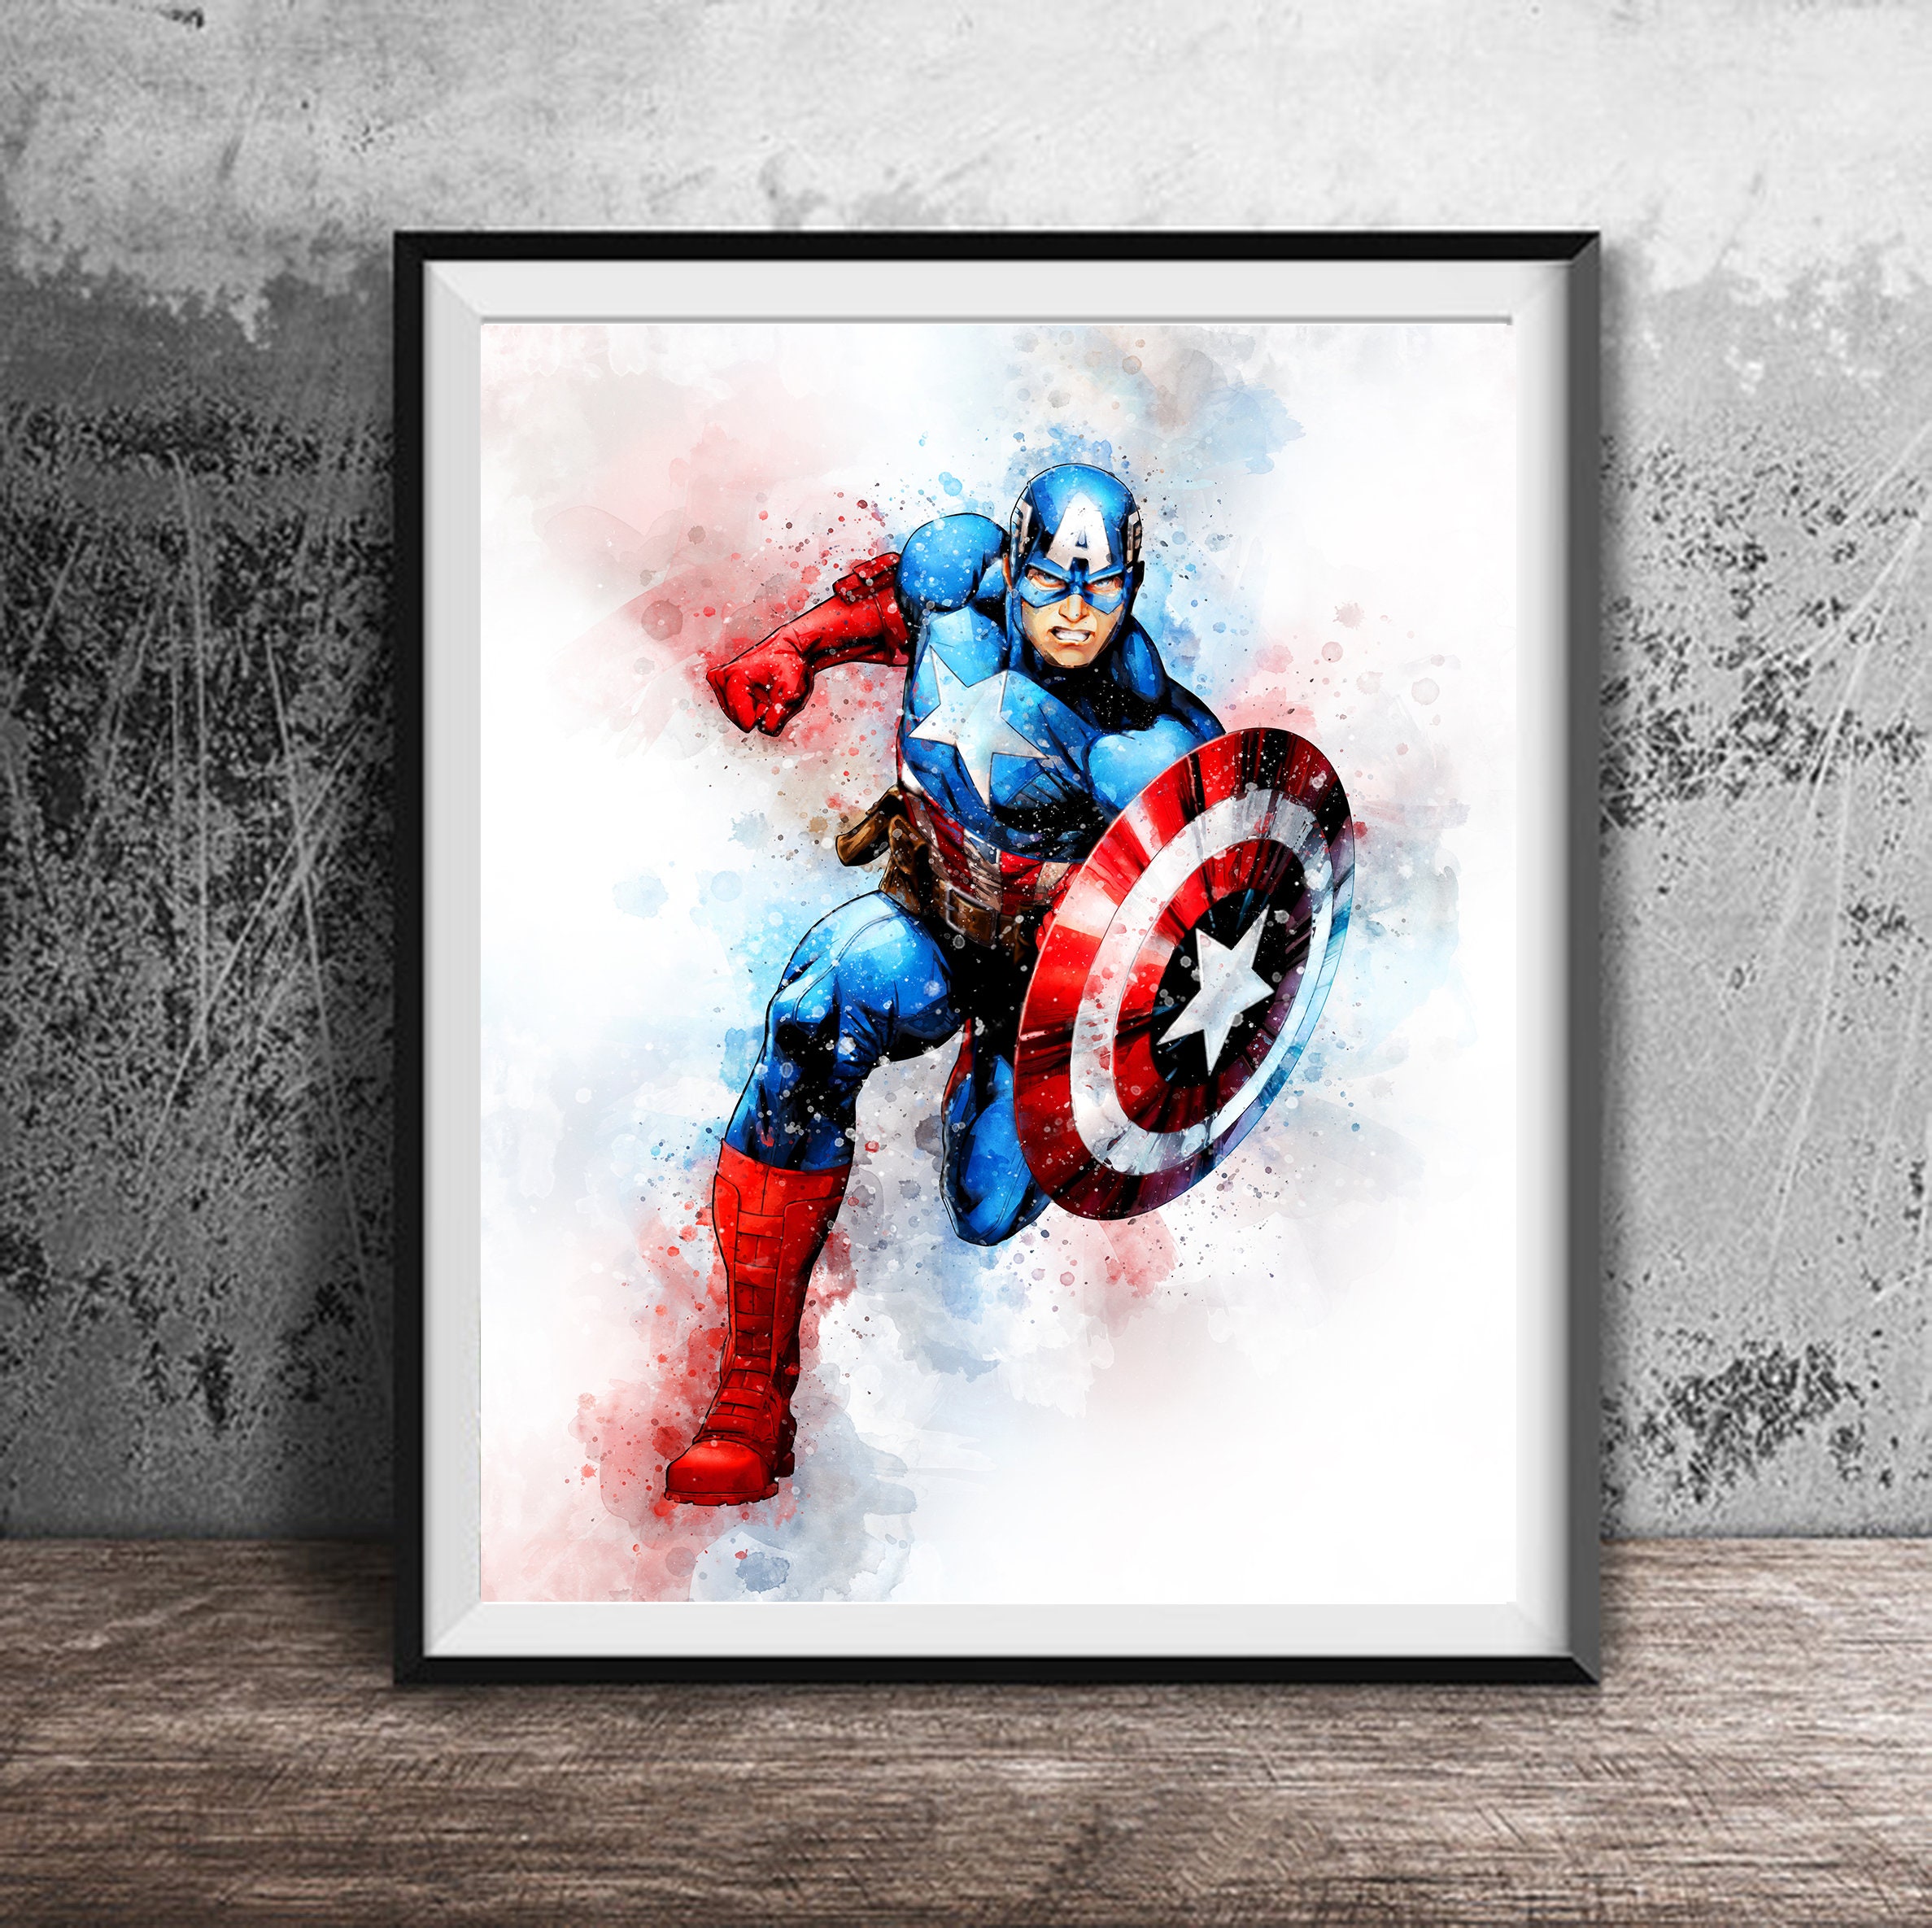 Poster Marvel Comics Captain America Retro 40x50cm